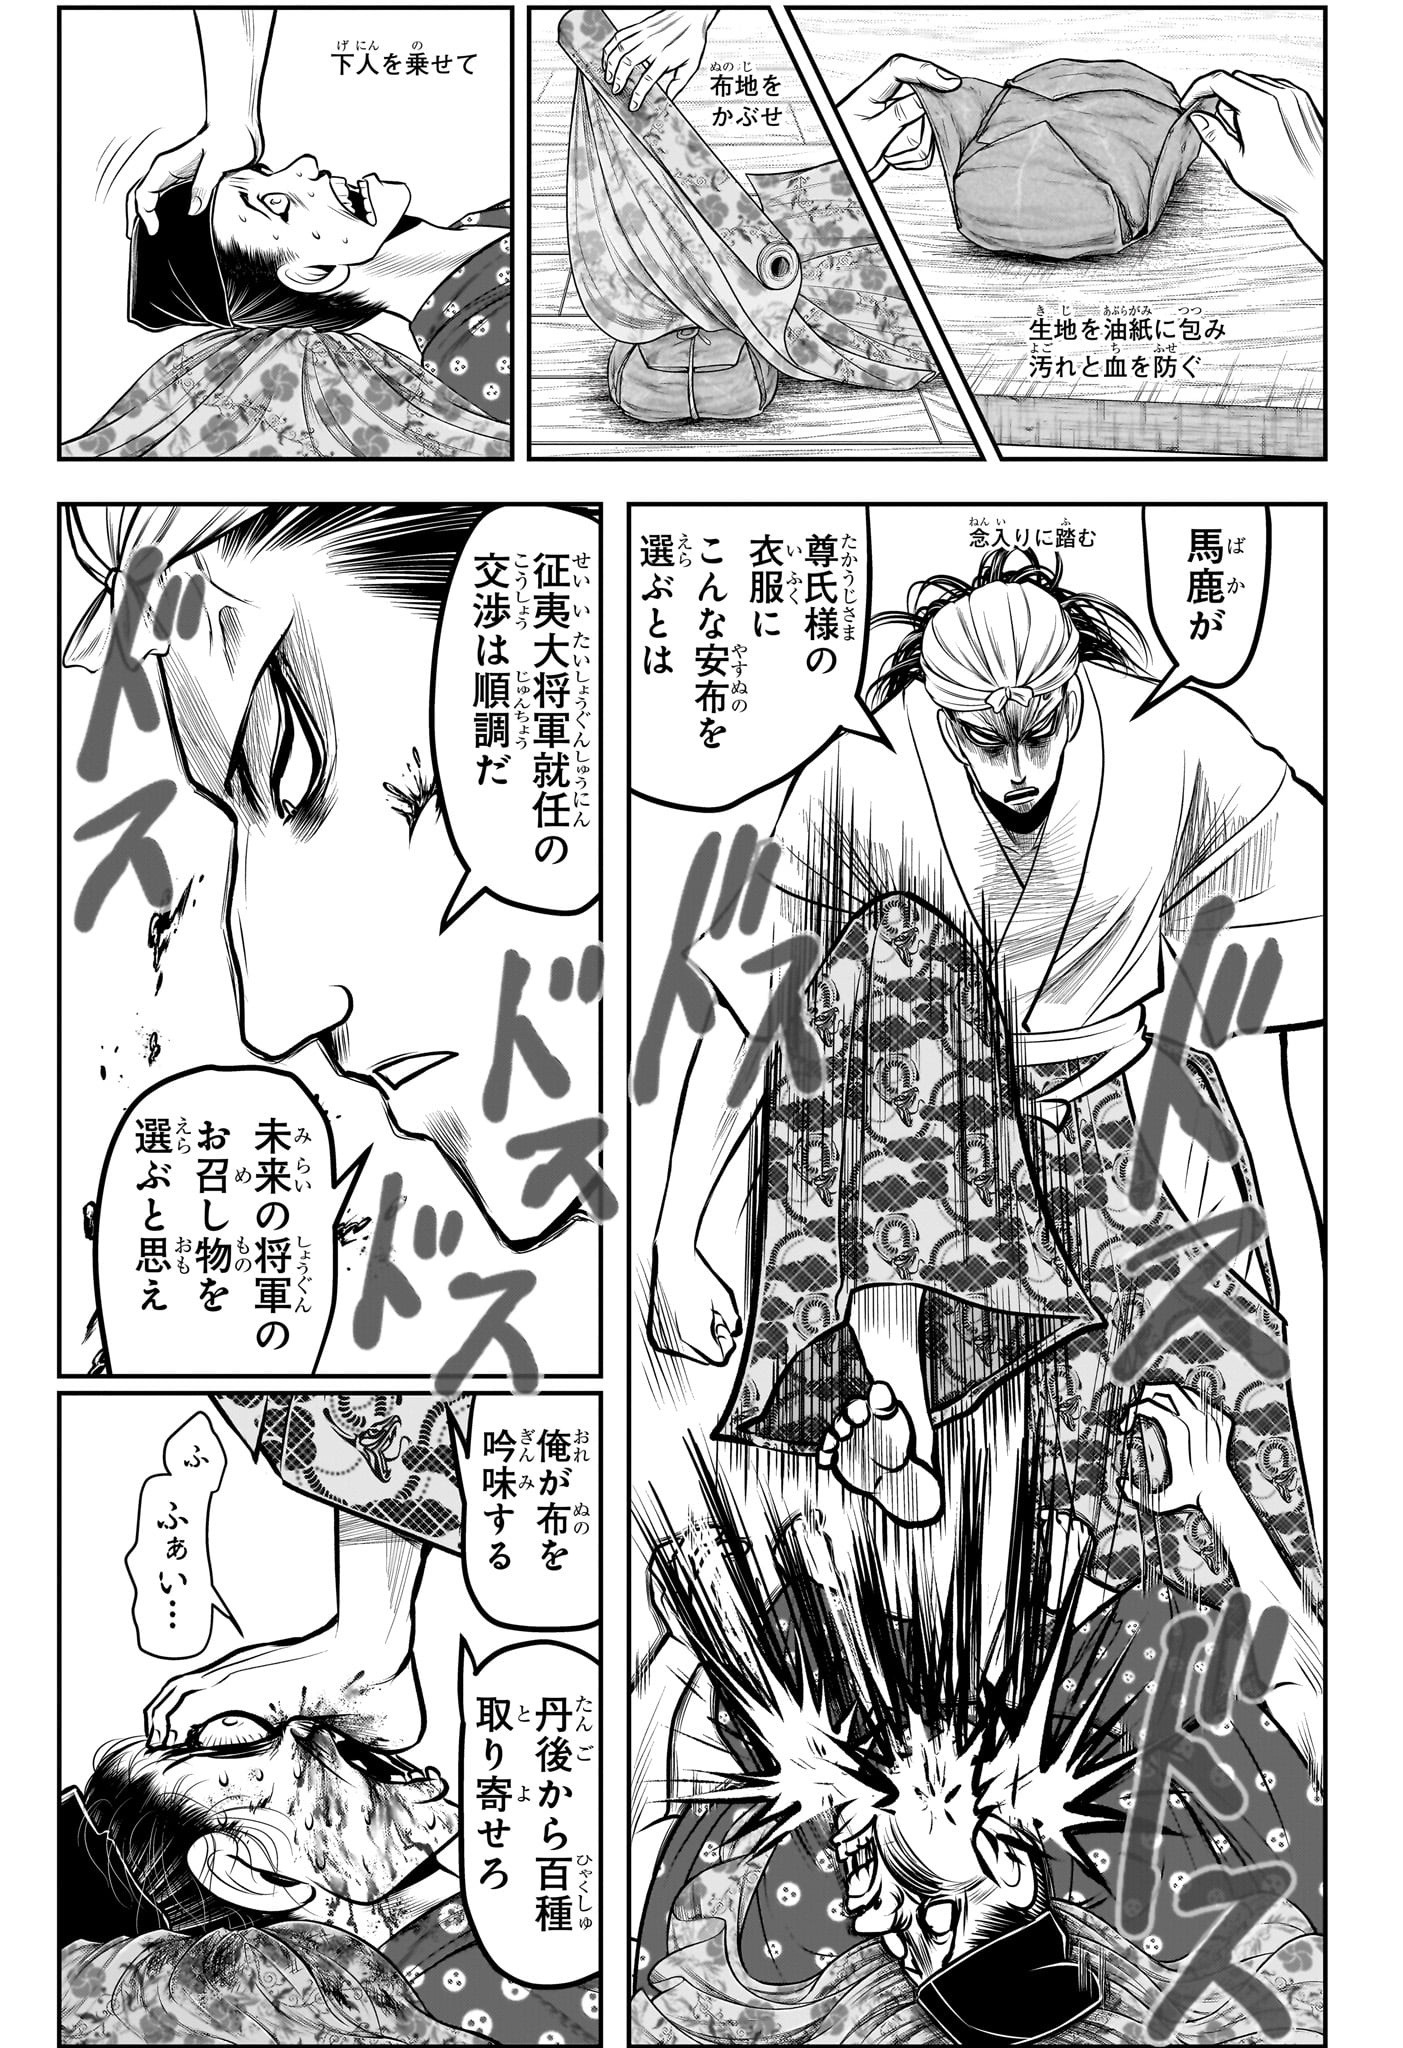 Nige Jouzu no Wakagimi - Chapter 150 - Page 3